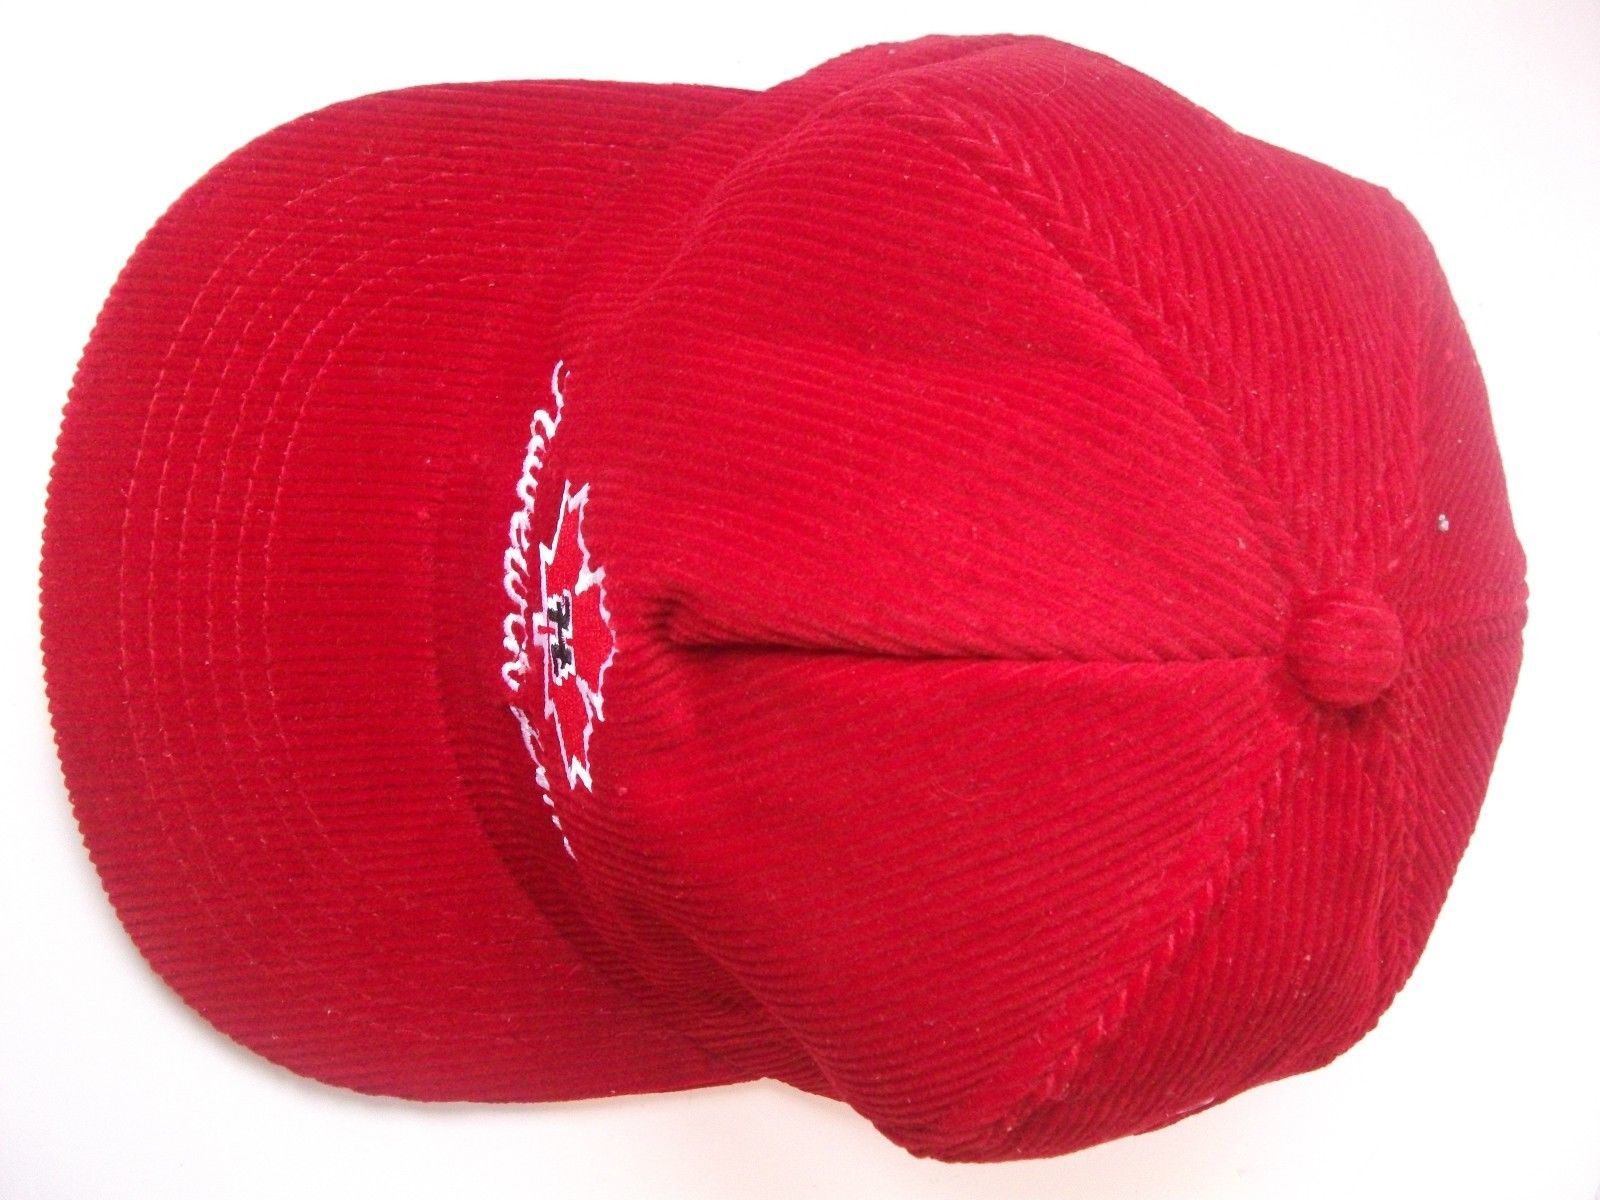 Vintage Havelock Lime Hat Red Corduroy Snapback Baseball Cap - Hats